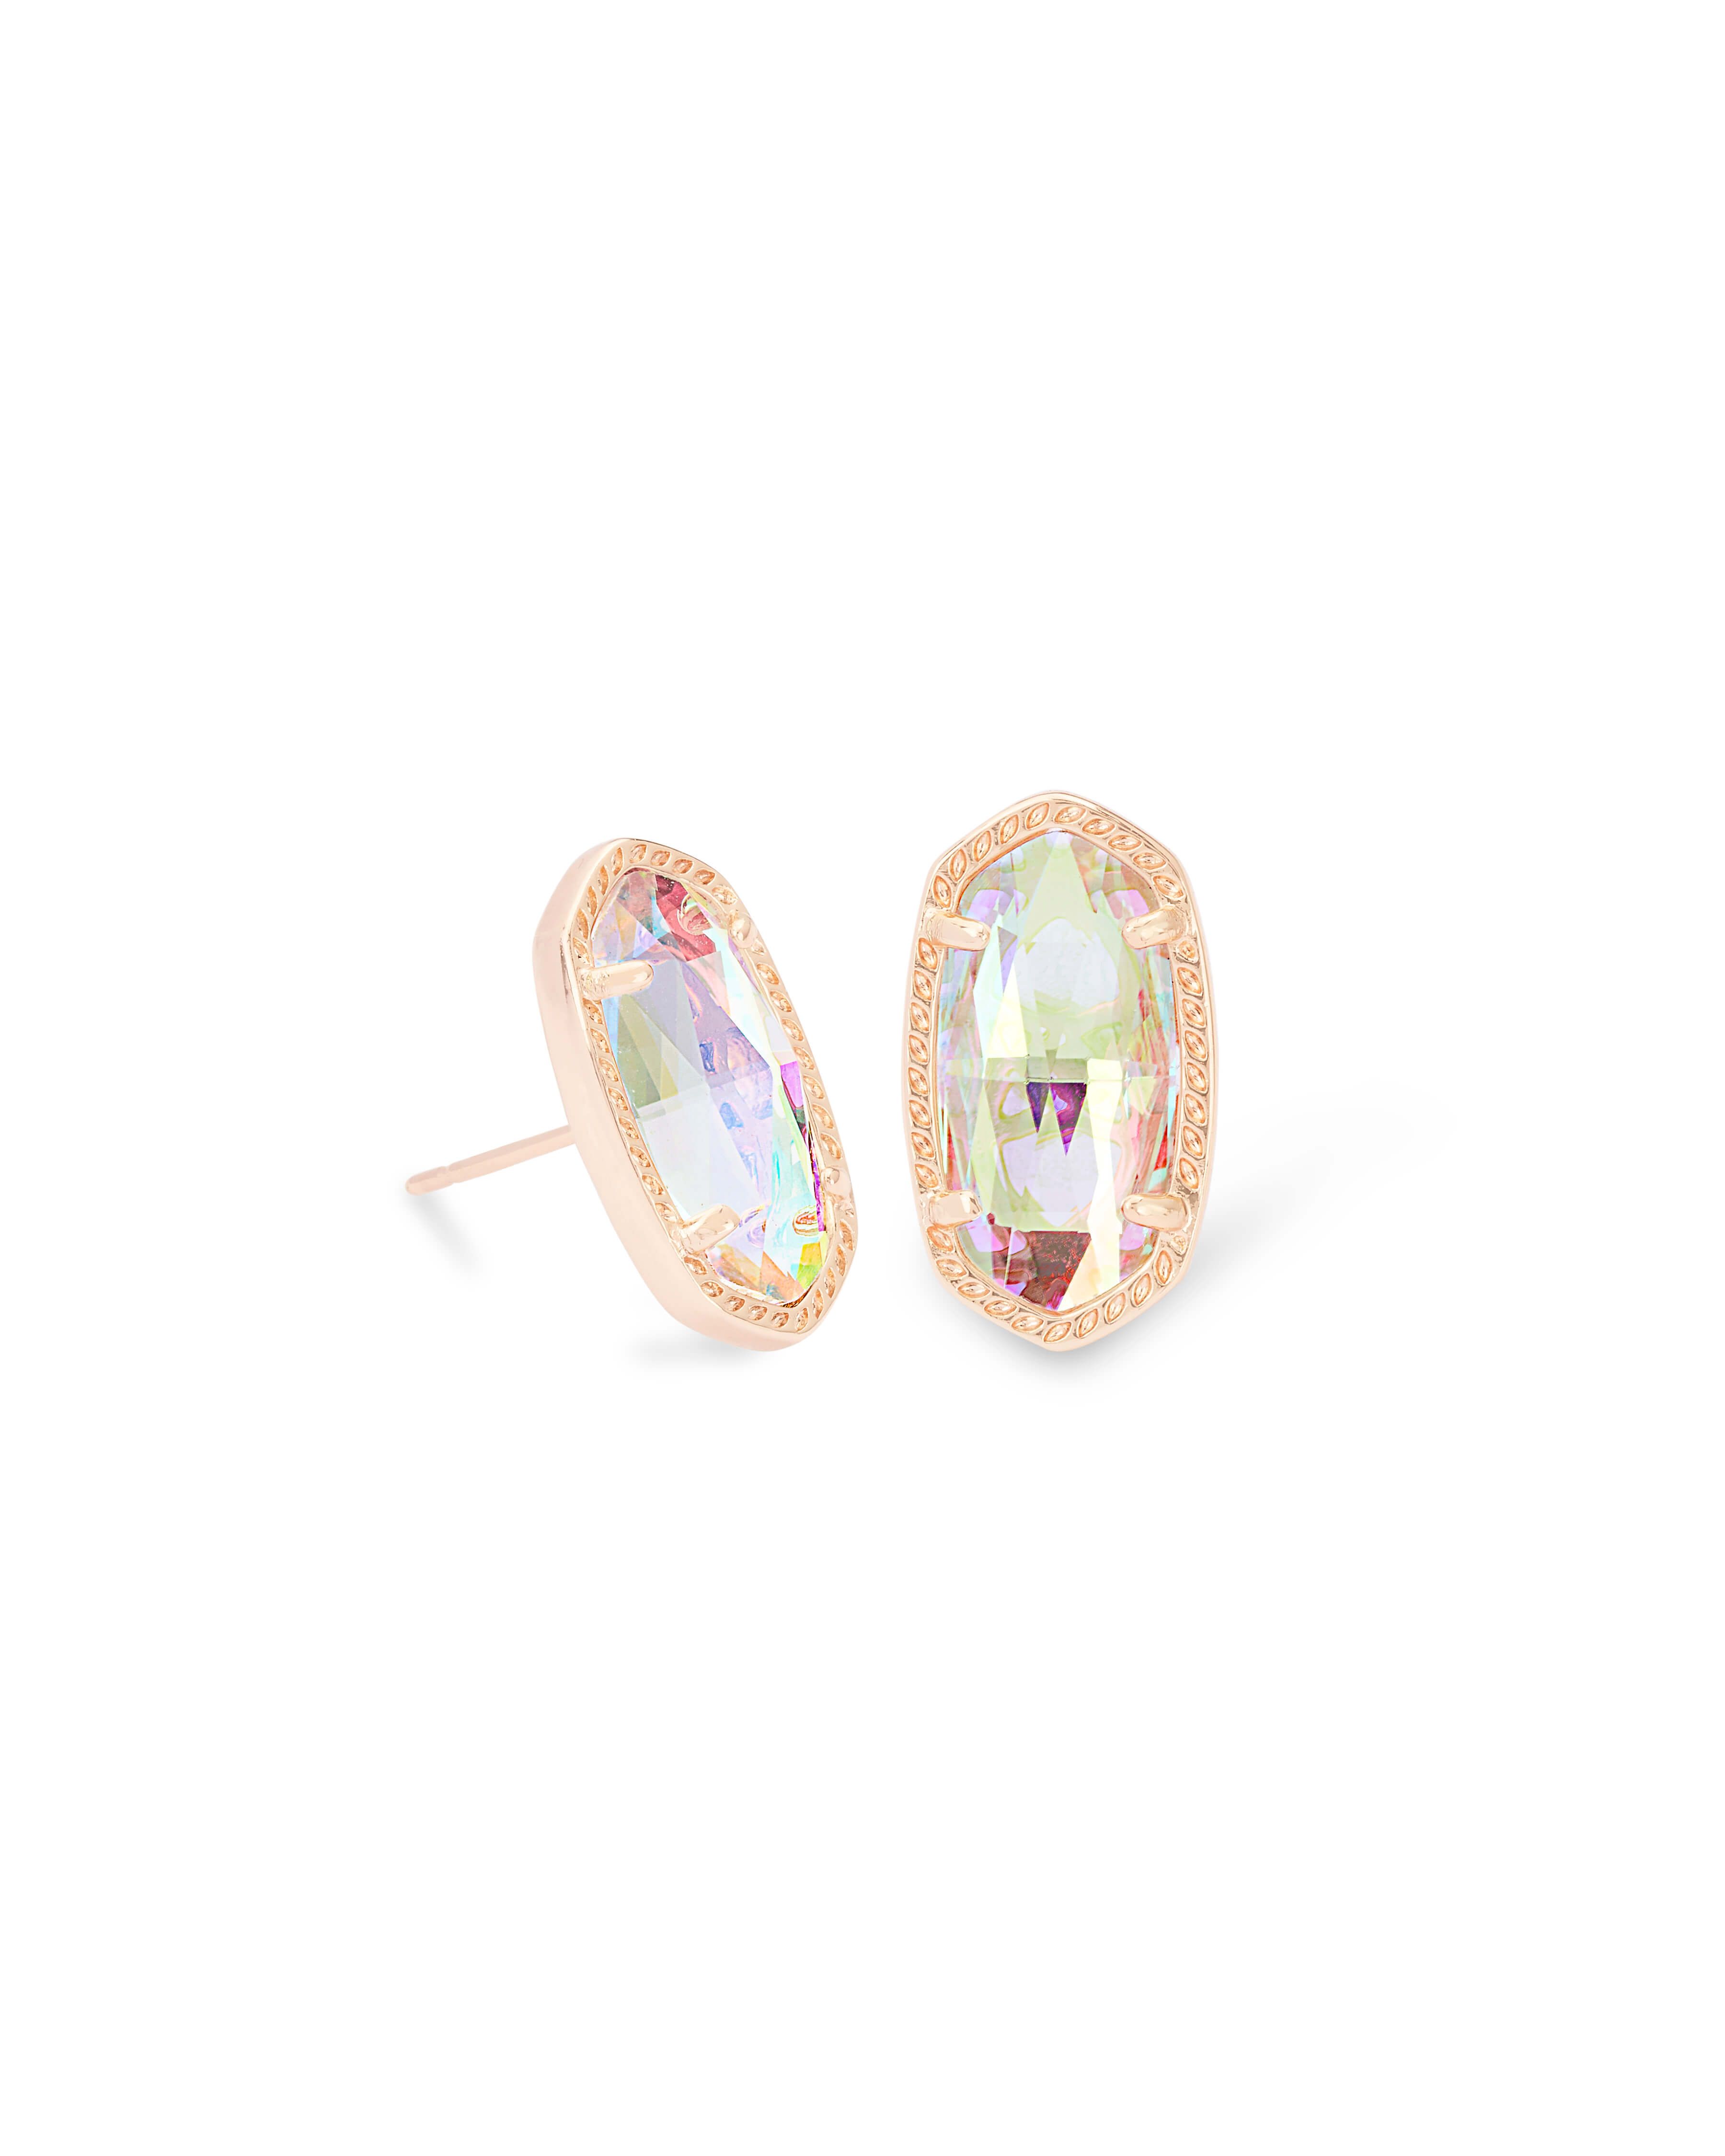 Ellie Rose Gold Stud Earrings in Dichroic Glass | Kendra Scott